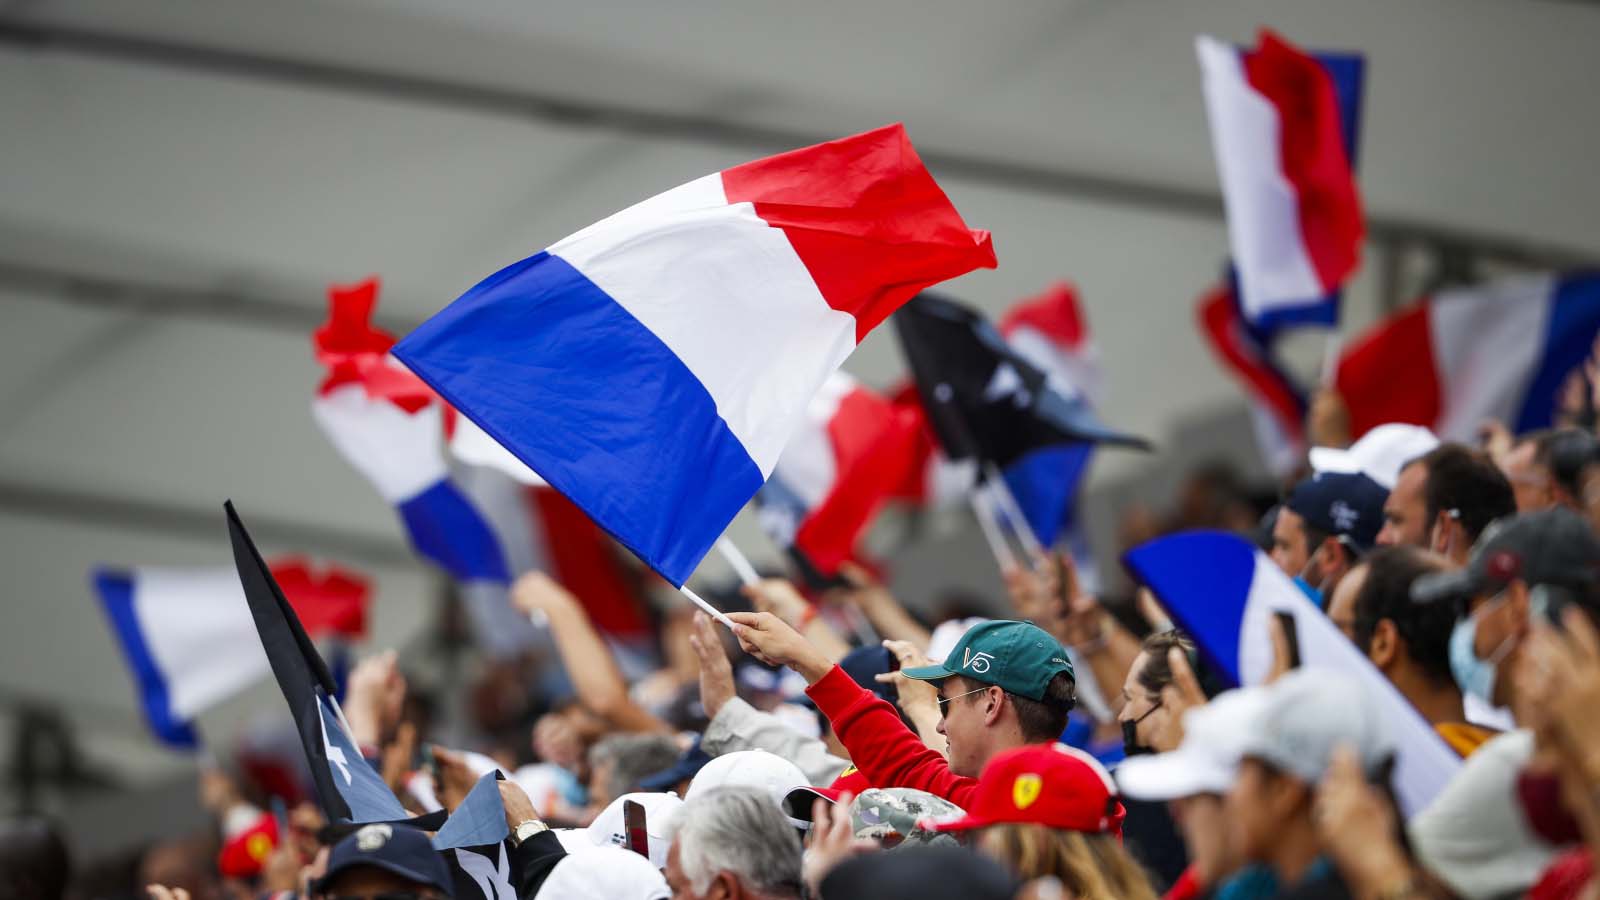 A fan waves a French flag. Paul Ricard June 2021.